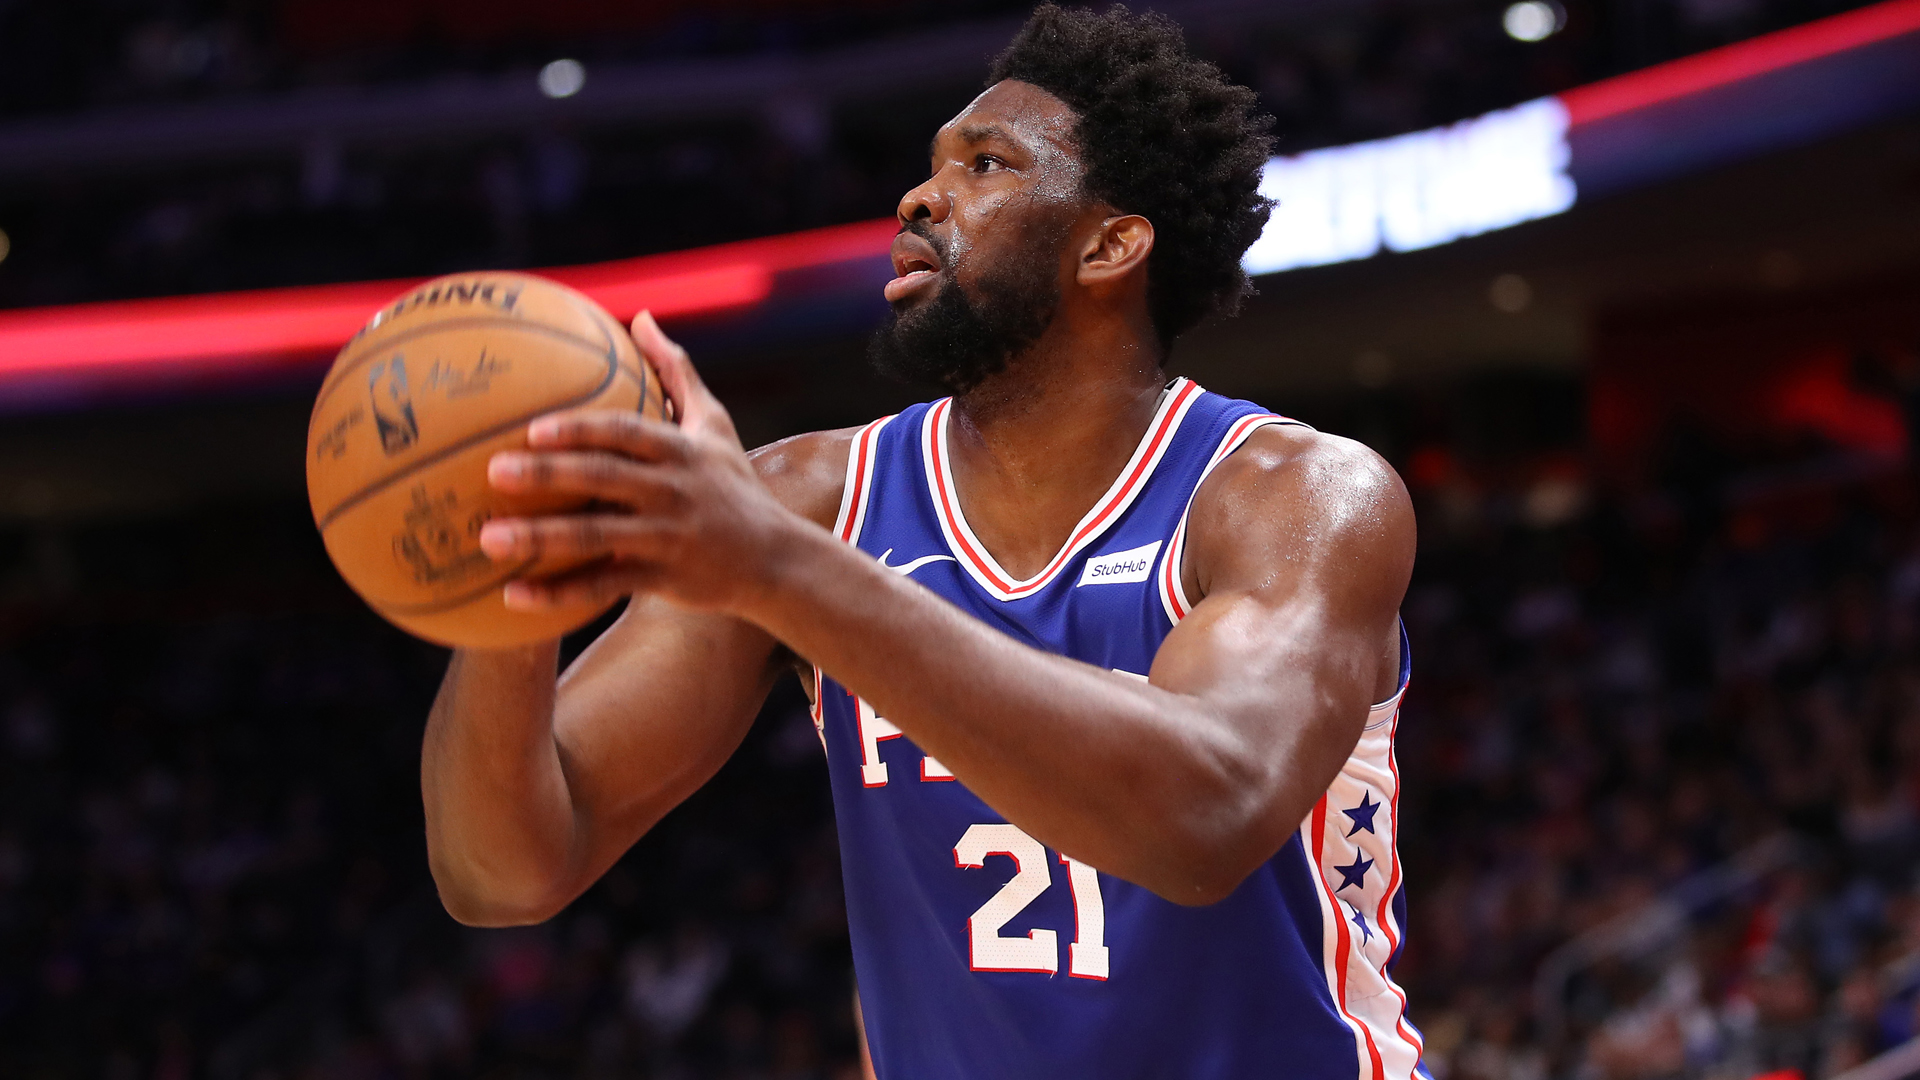 Joel Embiid honoured Kobe Bryant and led the Philadelphia 76ers to victory in the NBA.